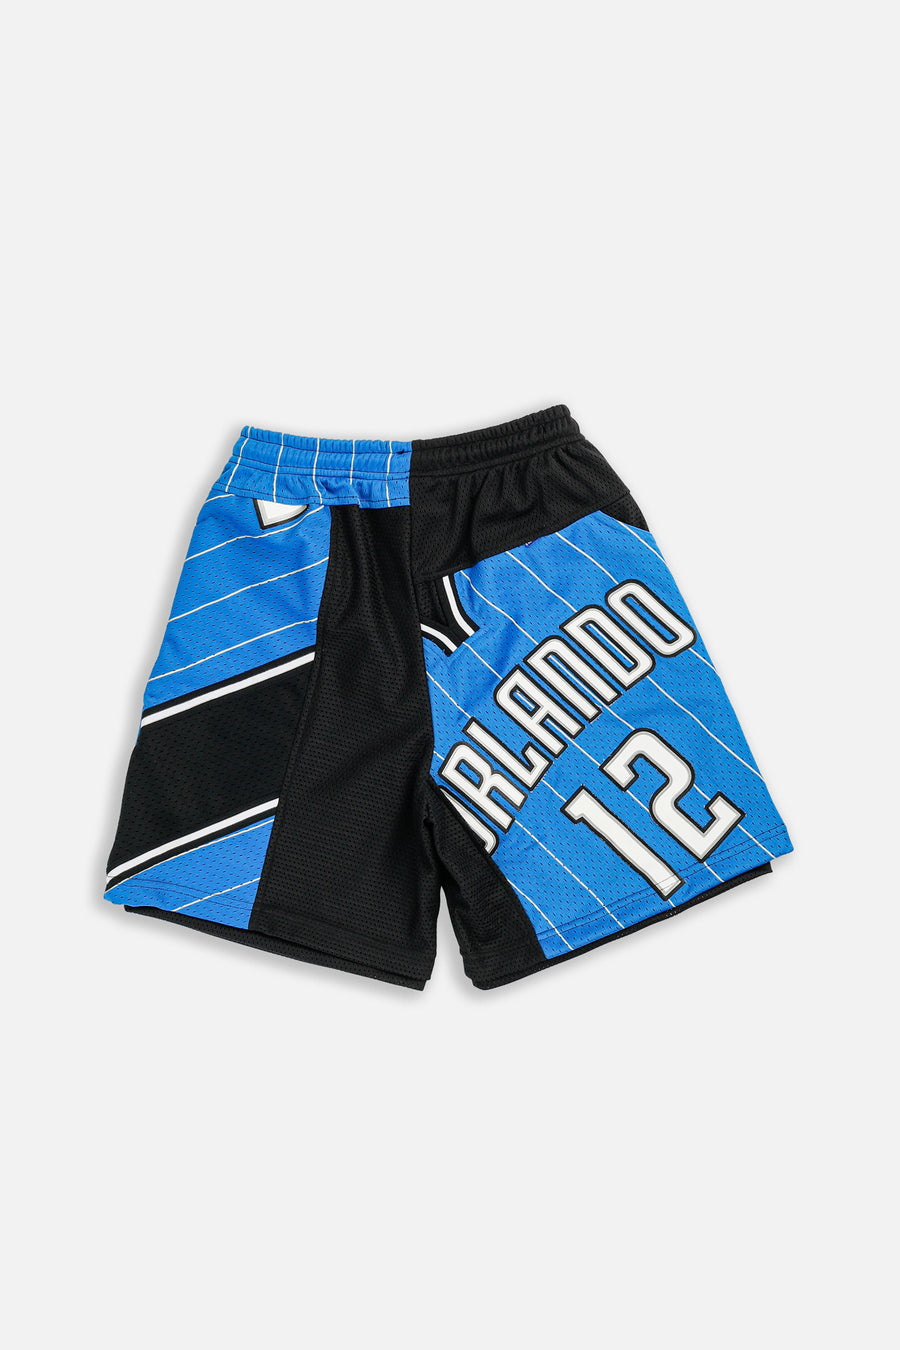 Unisex Rework Orlando Magic NBA Jersey Shorts - XS